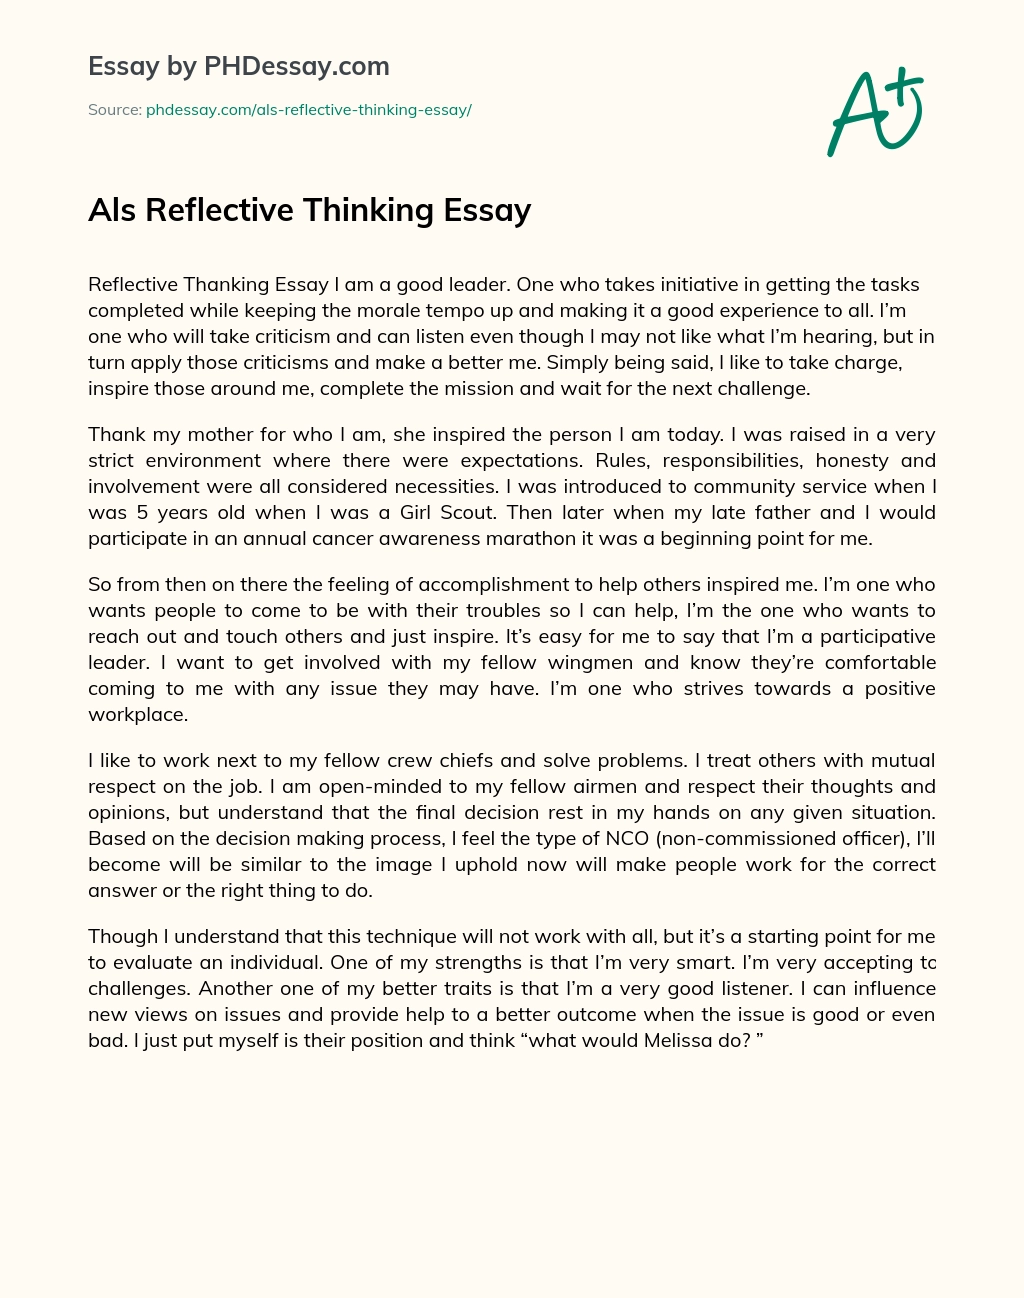 Als Reflective Thinking Essay essay